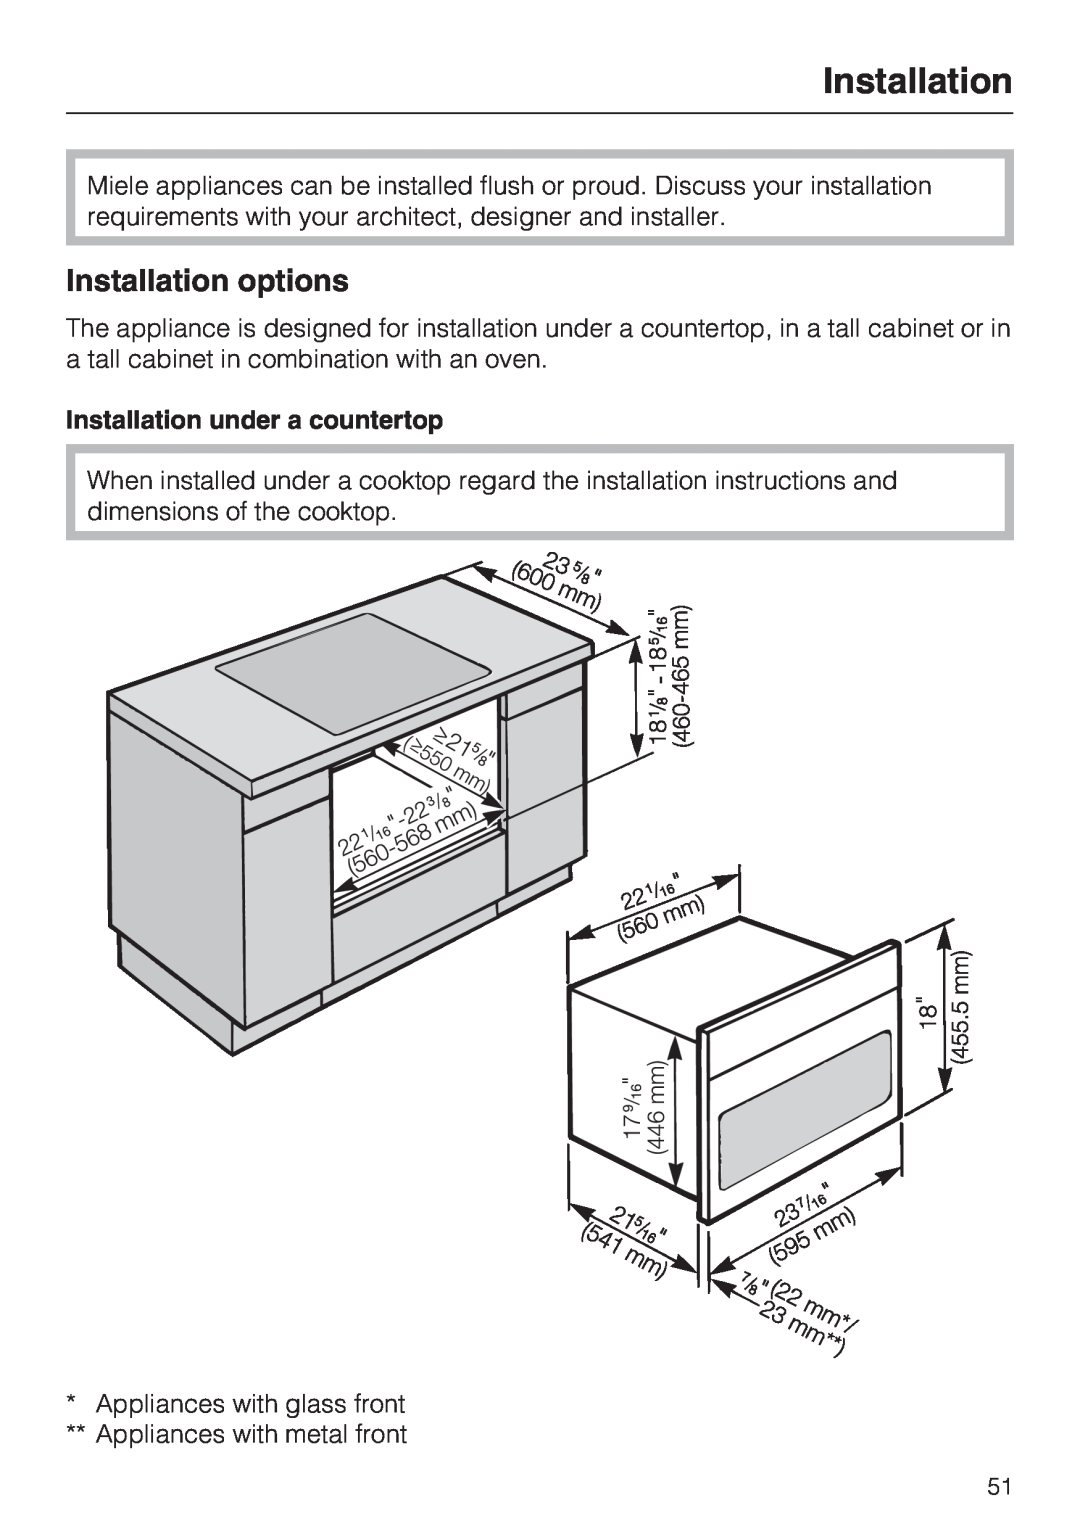 Miele H 4044 BM installation instructions Installation options, Installation under a countertop 